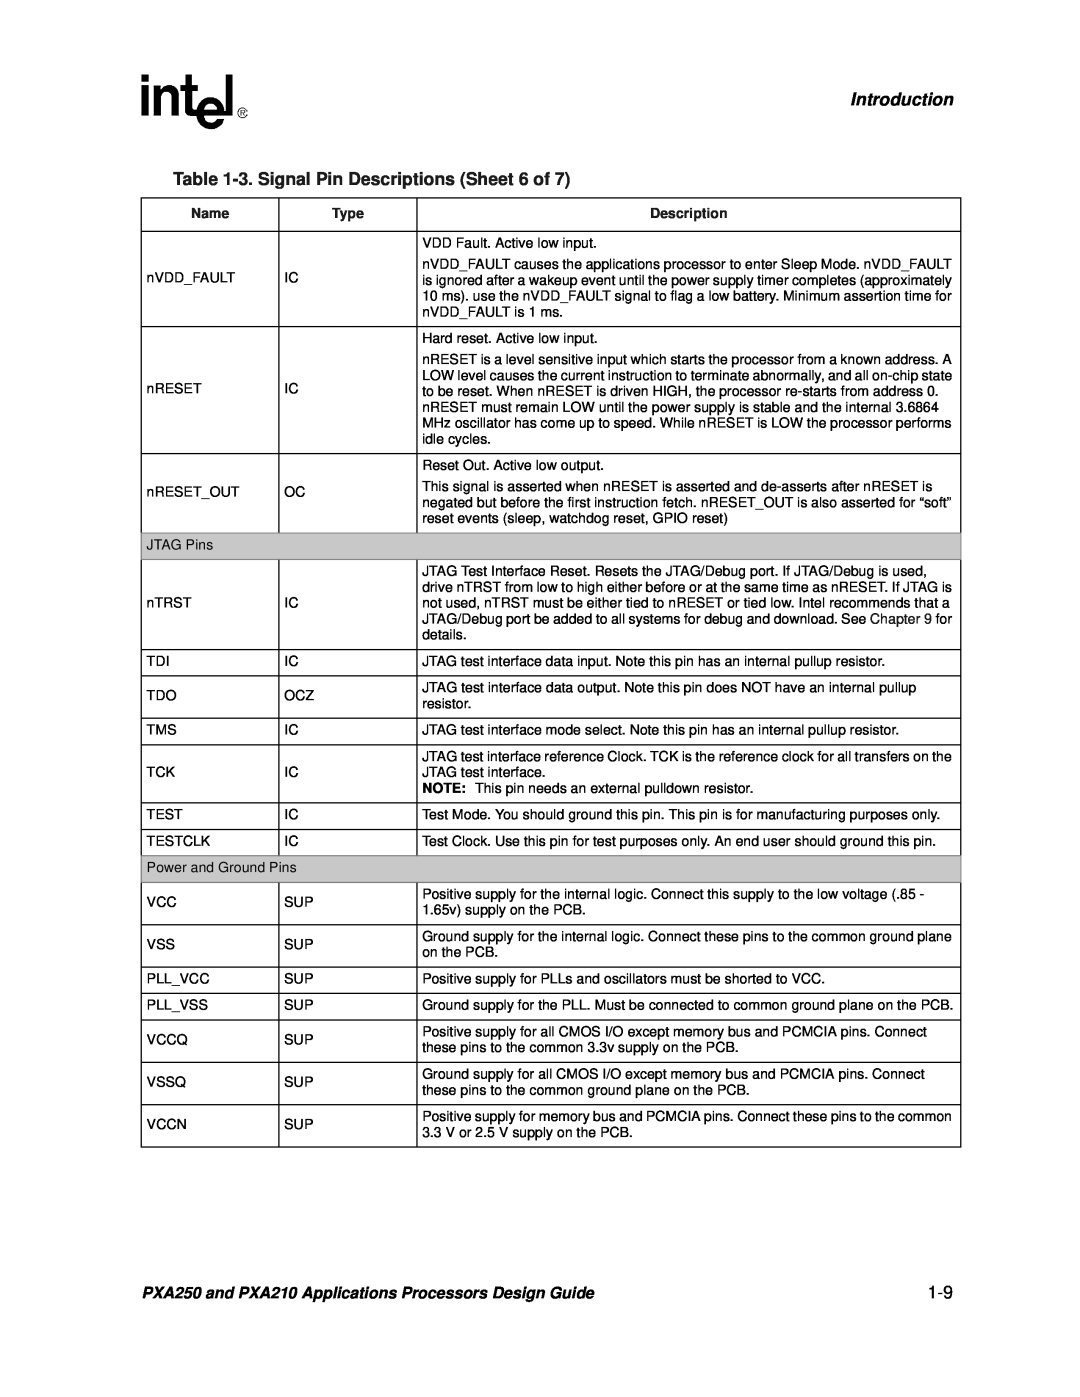 Intel PXA250 and PXA210 manual Introduction, 3. Signal Pin Descriptions Sheet 6 of 